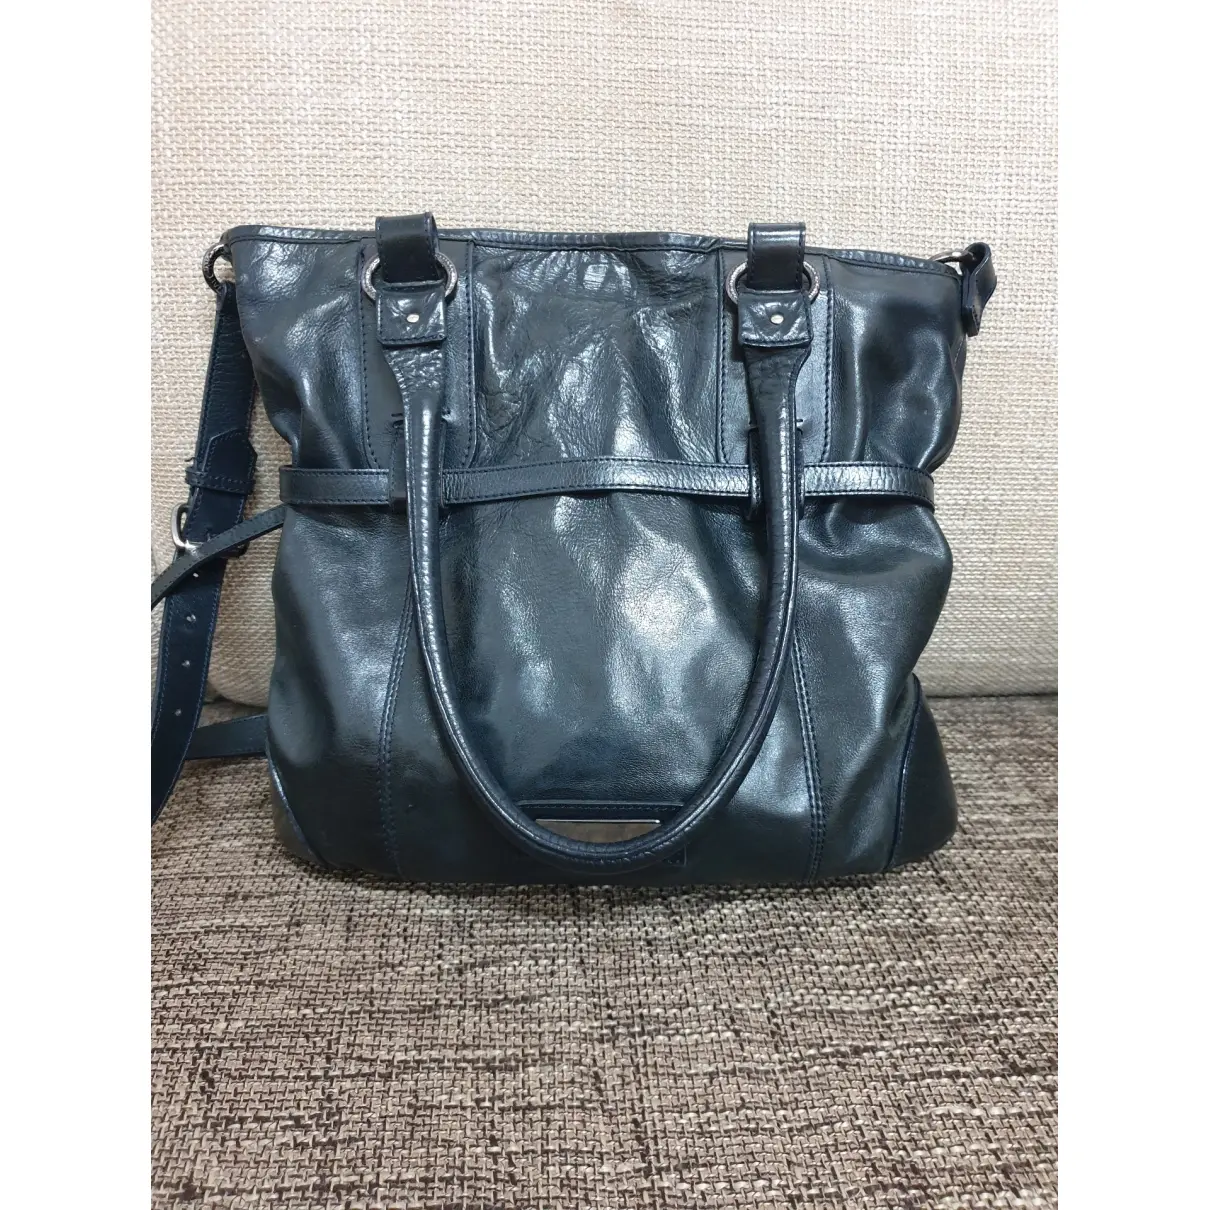 Buy CNC Leather bag online